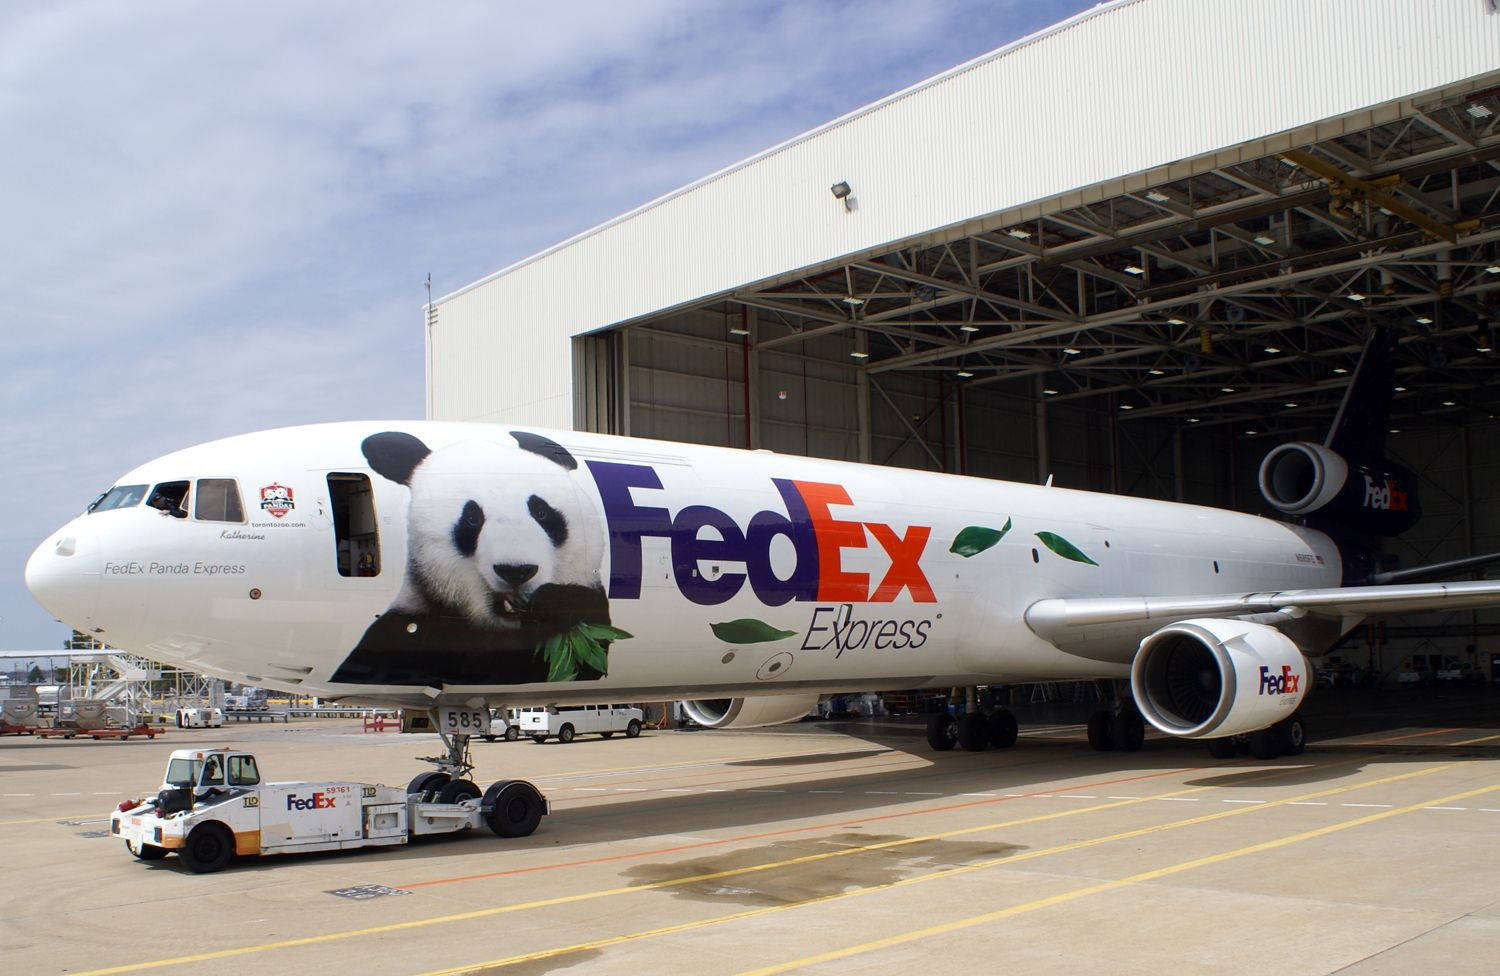 Fedex Panda Express Background